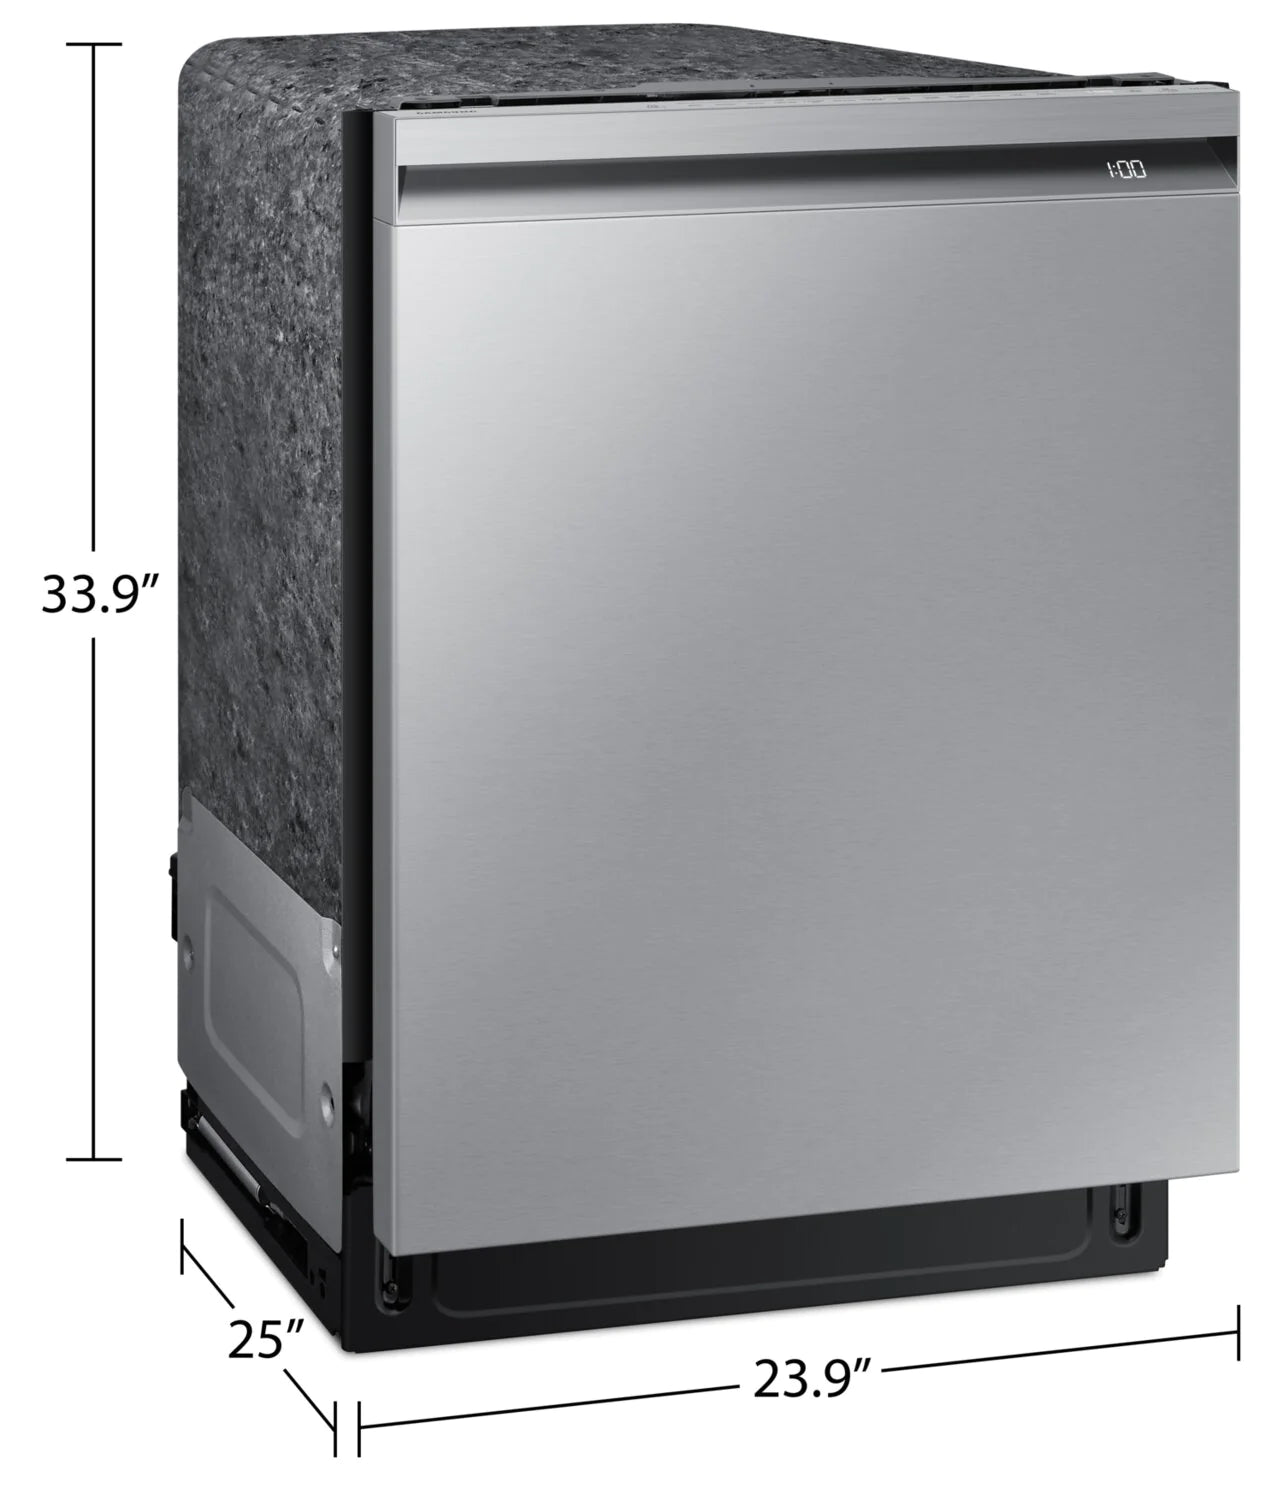 Samsung Dishwashers 24" Stainless Steel DW80B7070US